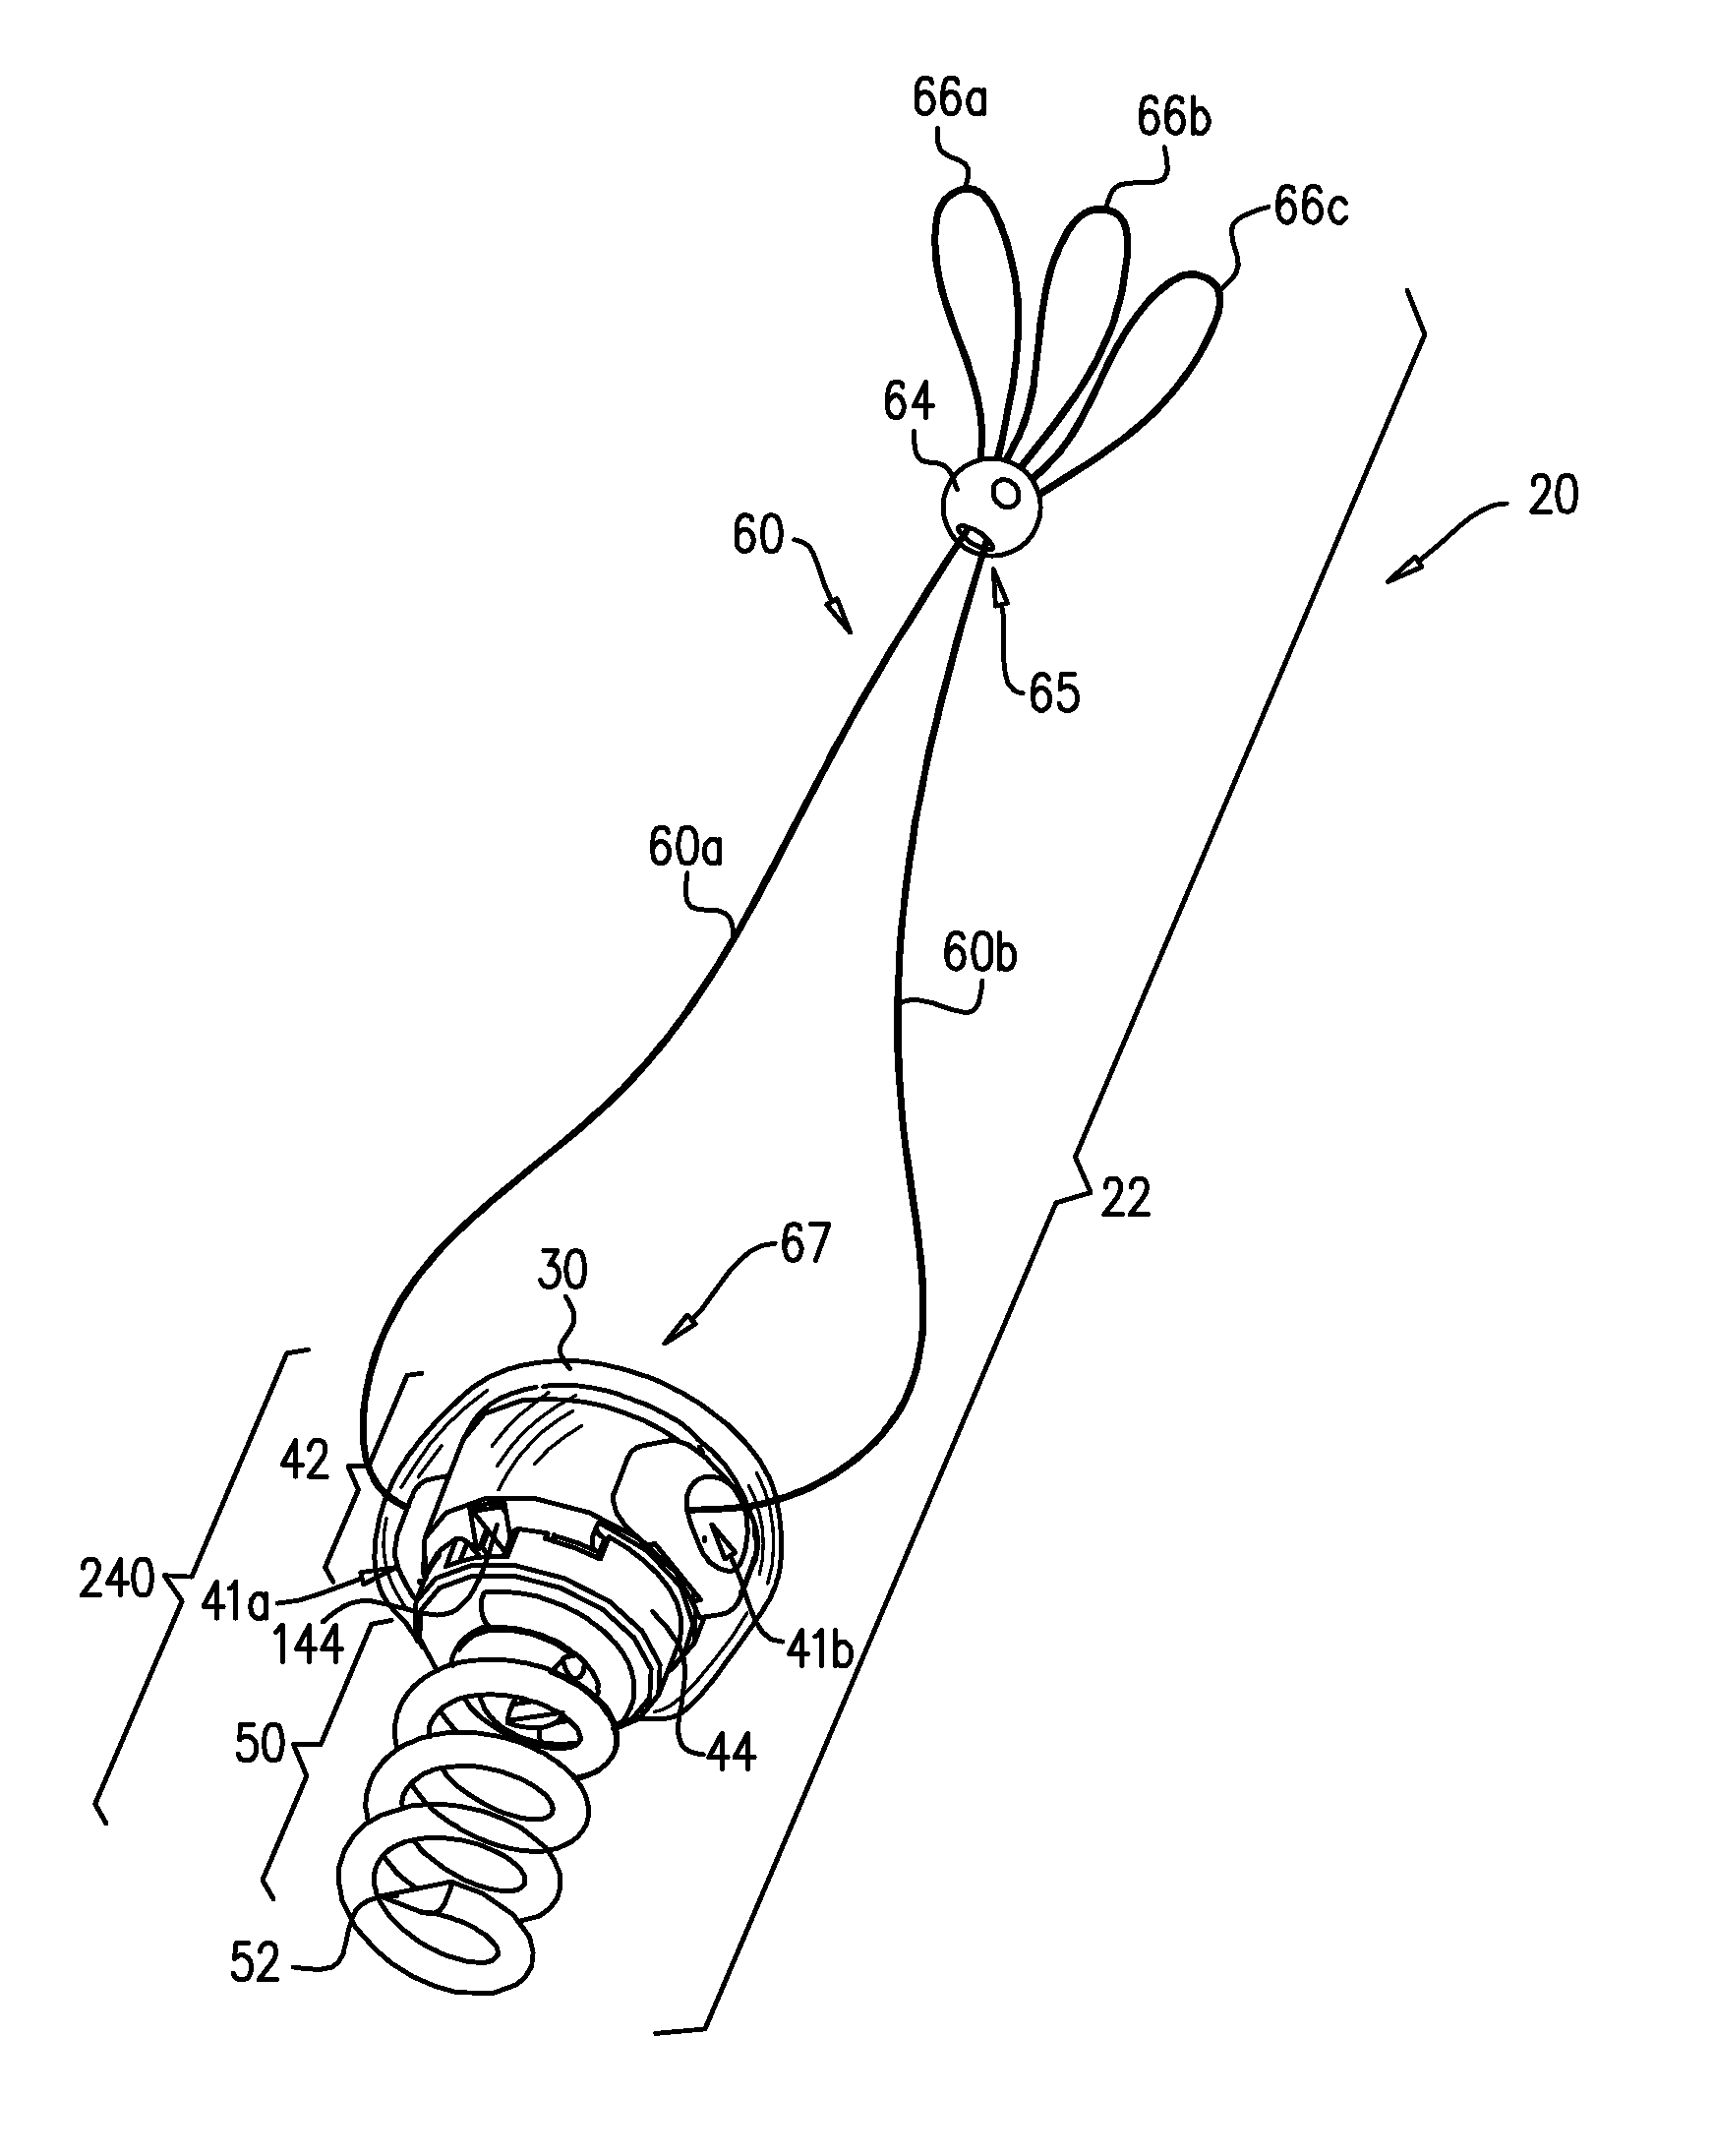 Adjustable artificial chordeae tendineae with suture loops